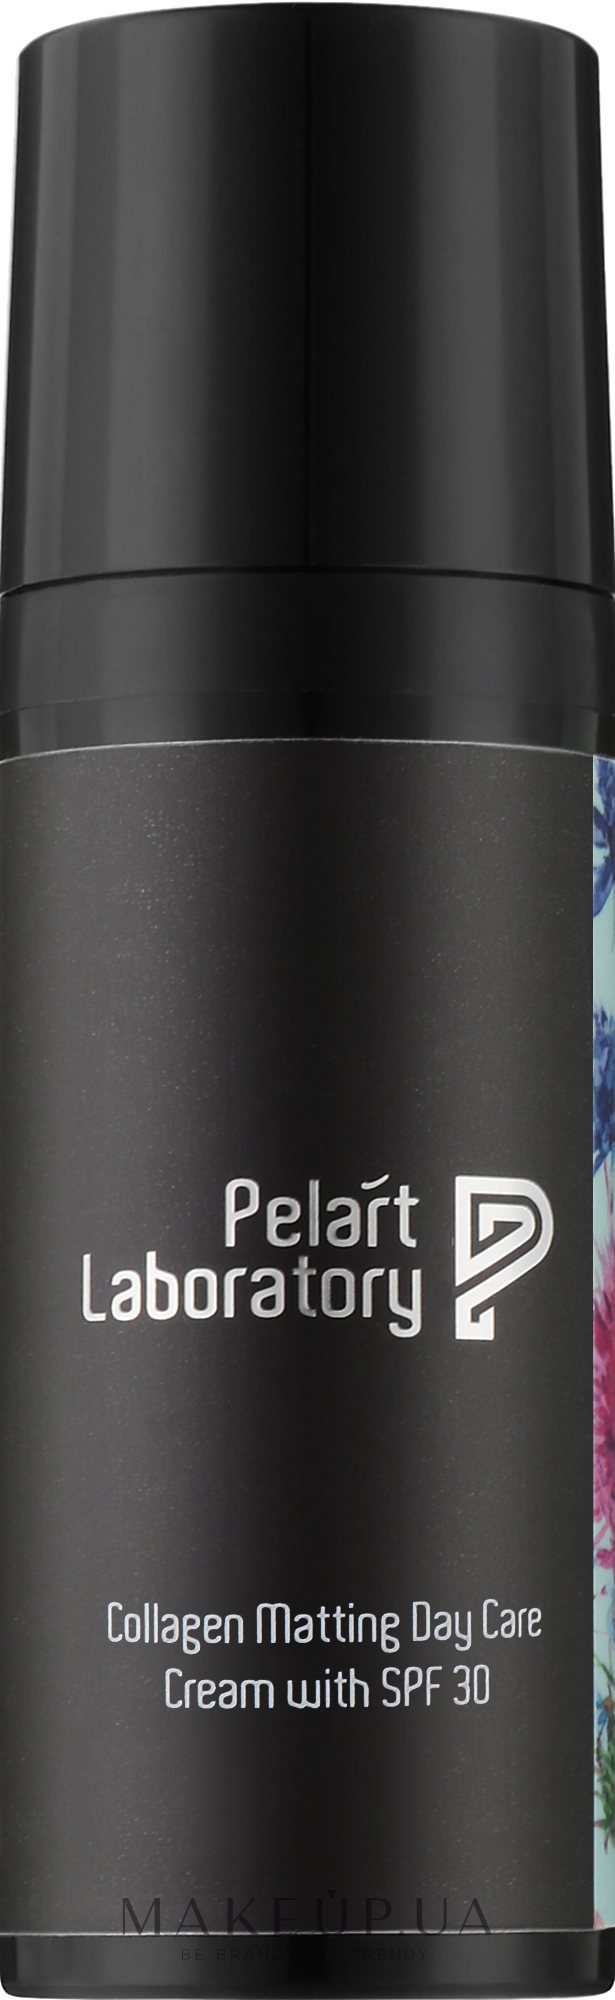 Дневной матирующий крем с коллагеном SPF 30 для лица - Pelart Laboratory Collagen Matting Day Care Cream With SPF 30  — фото 50ml